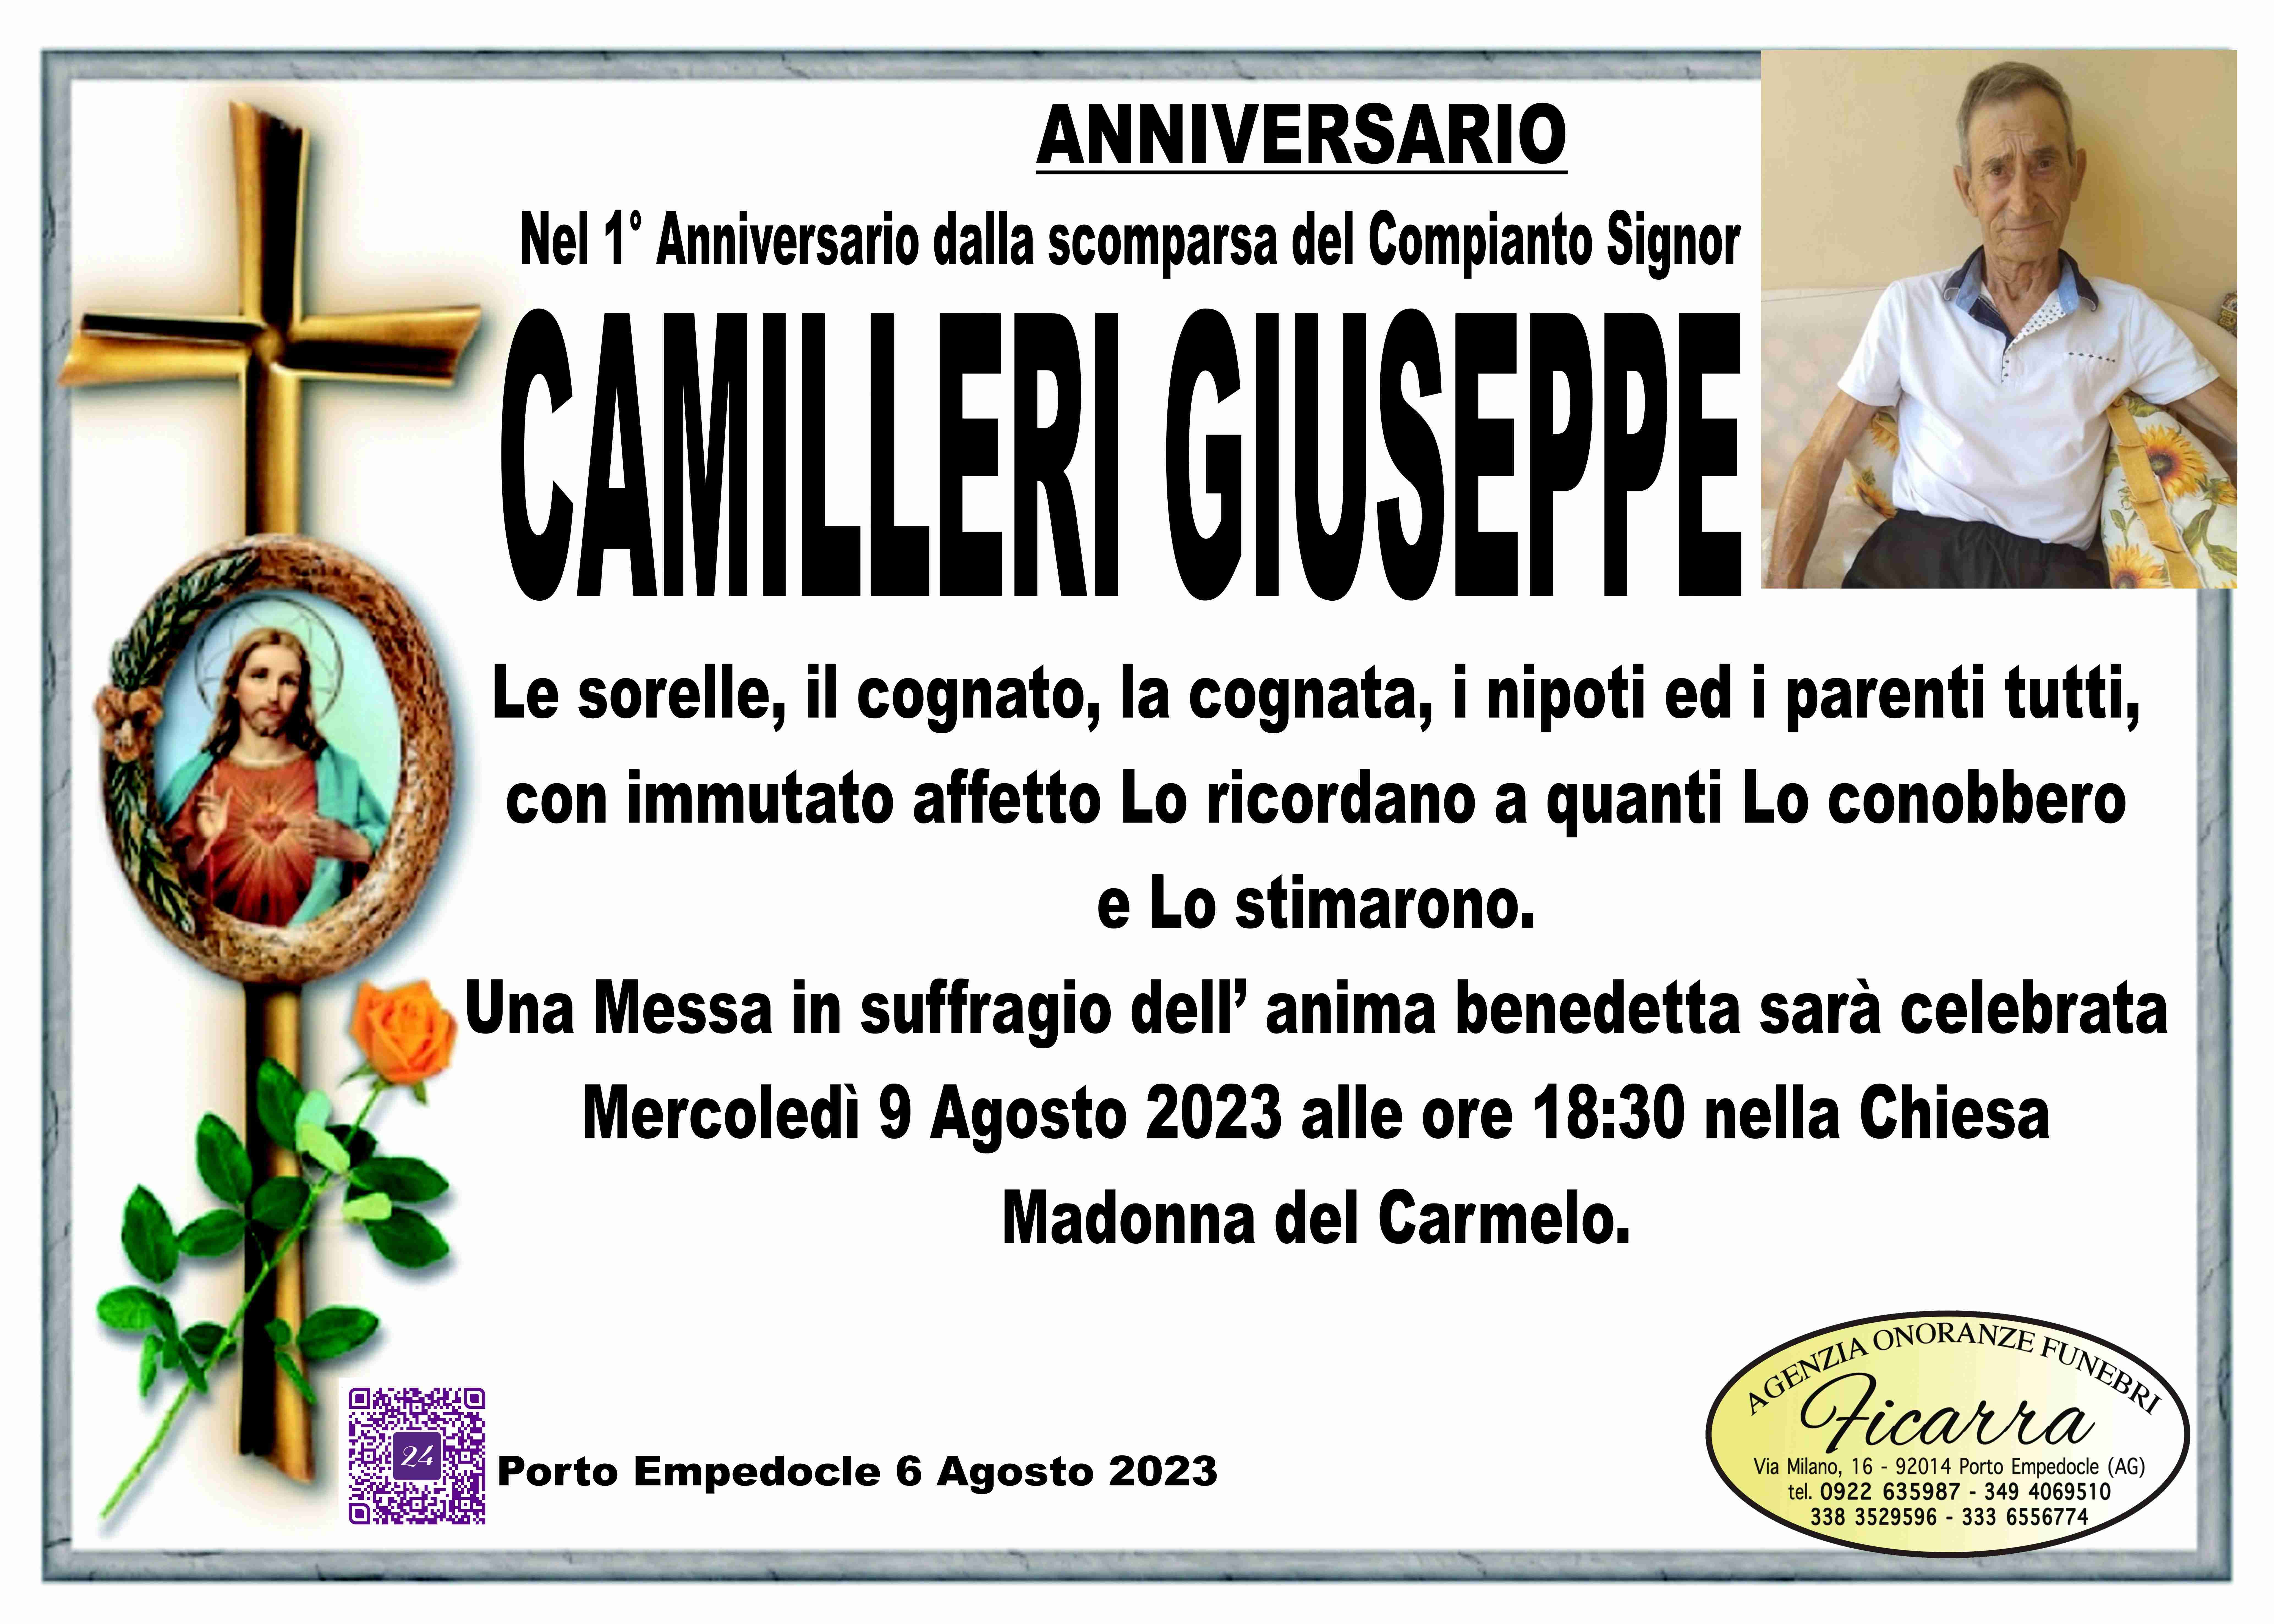 Giuseppe Camilleri